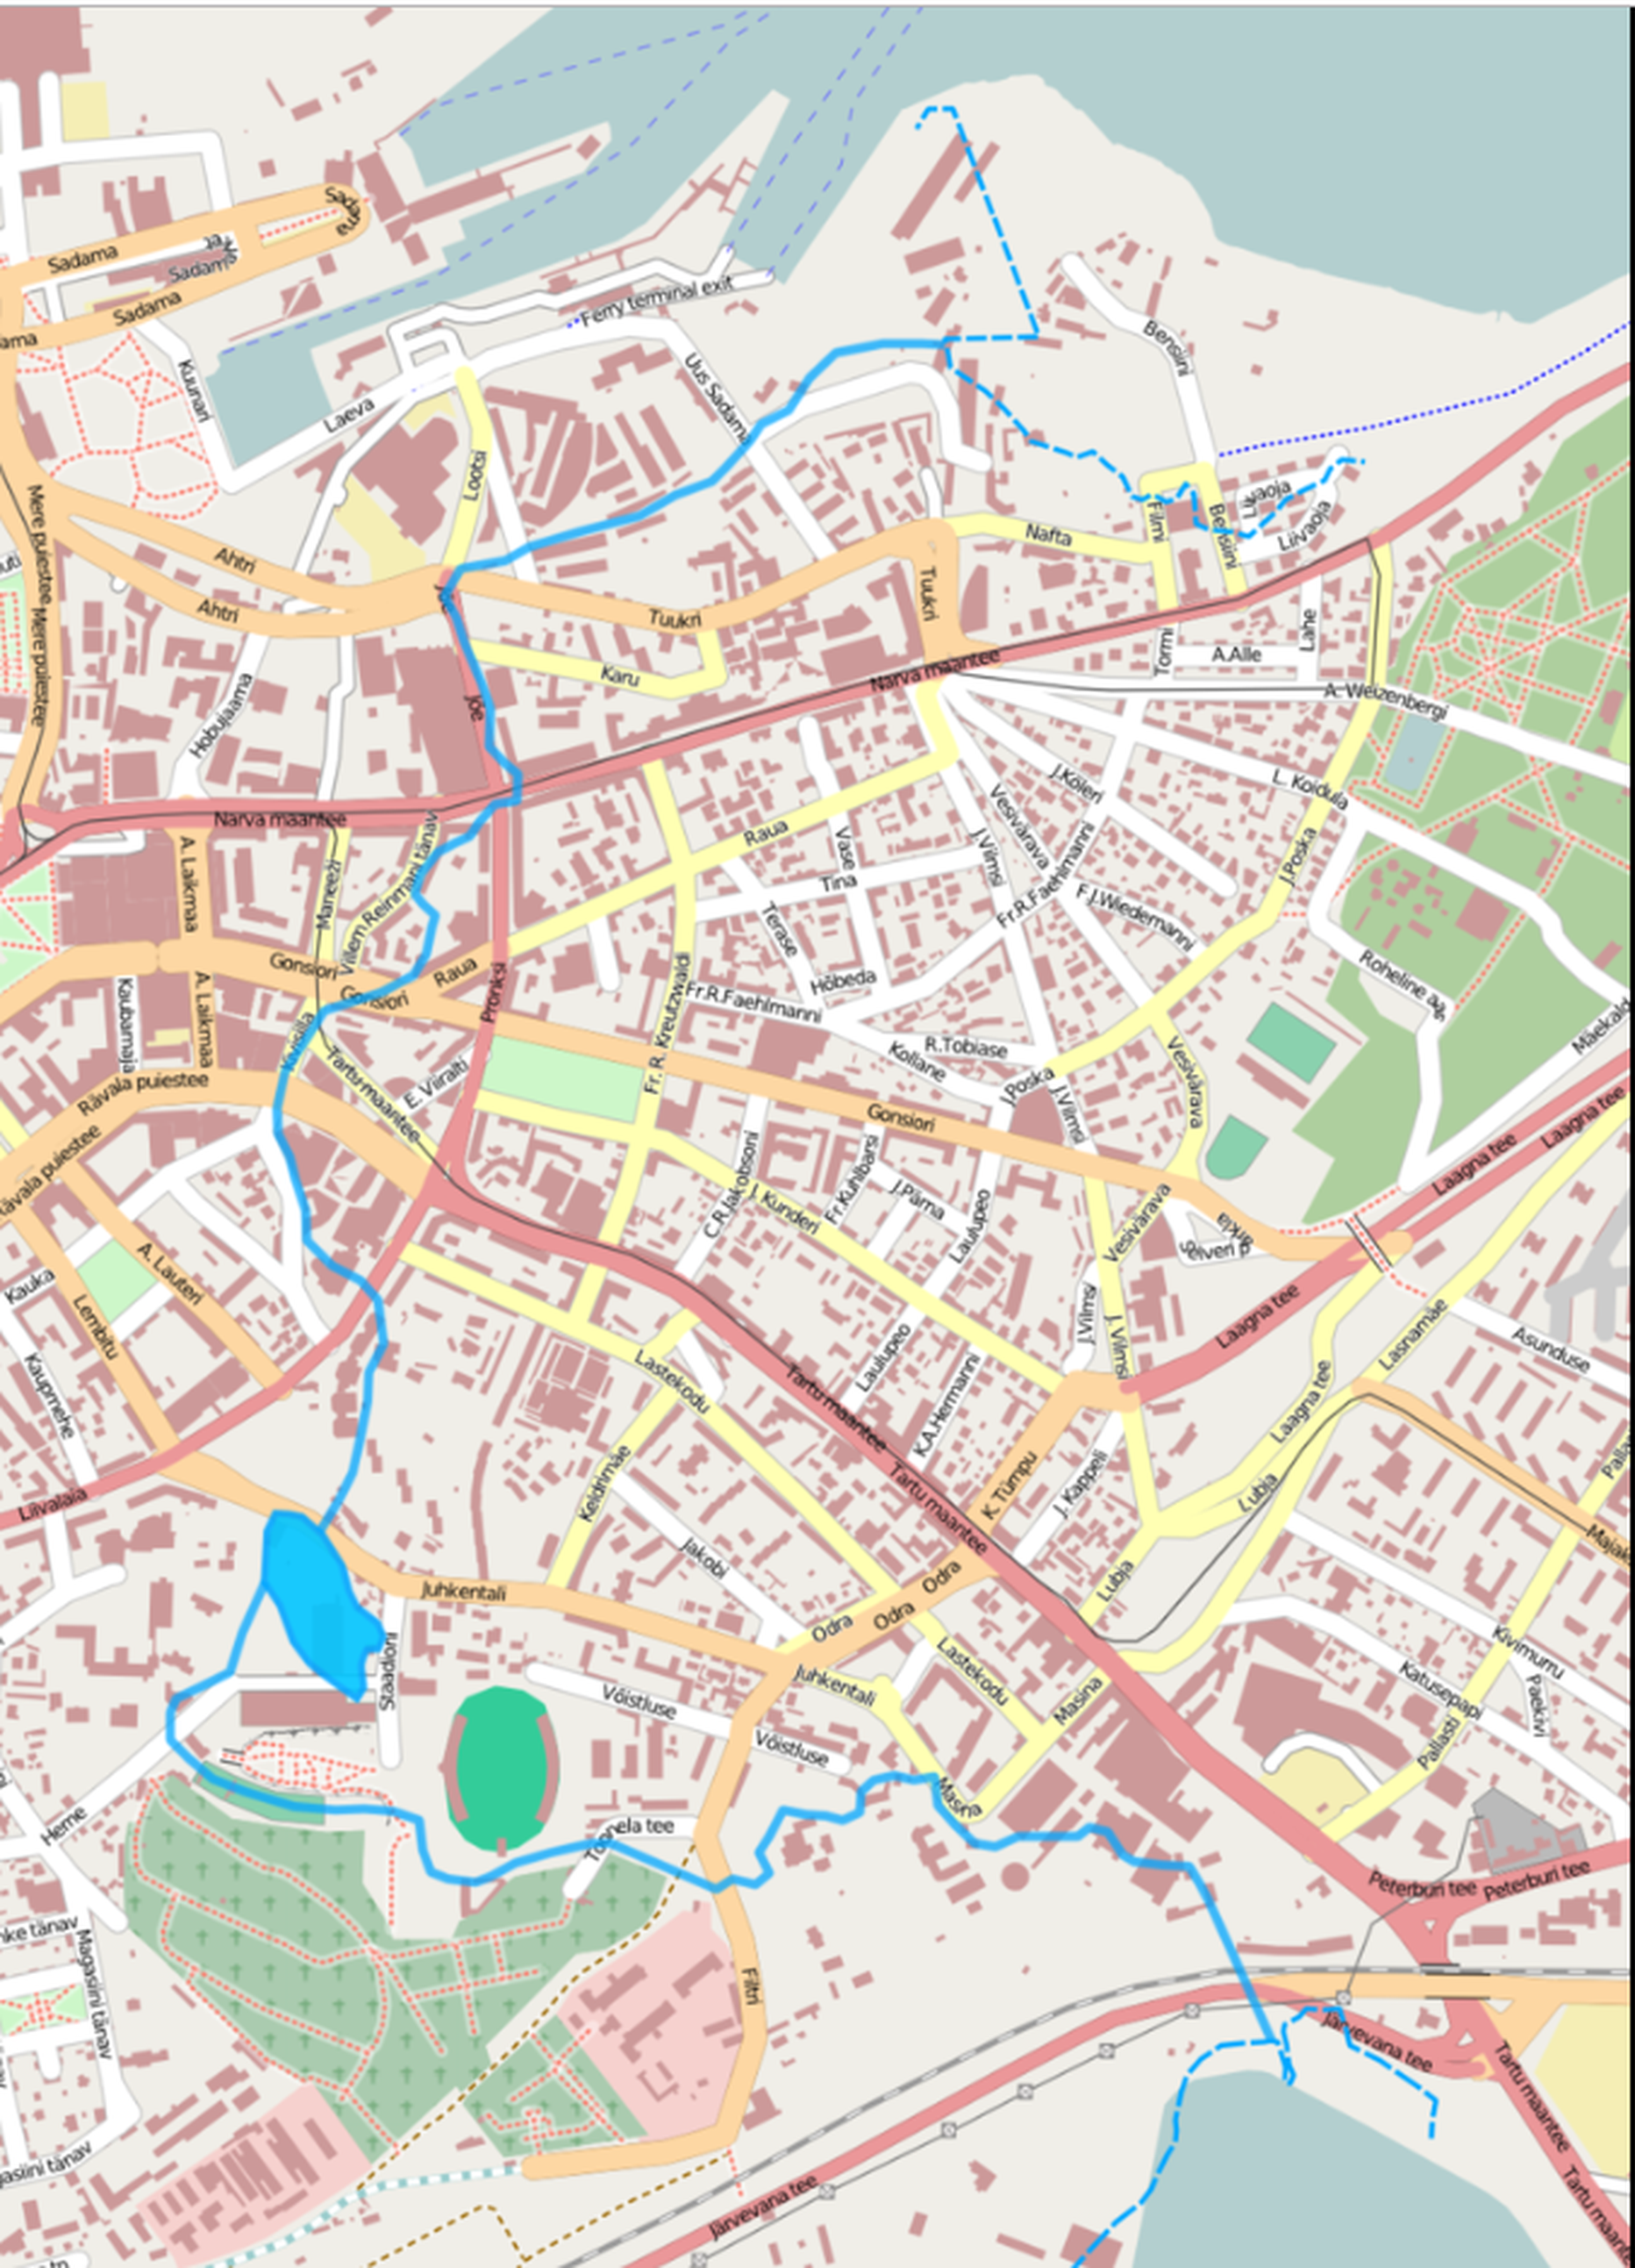 Изображение русла речки Харьяпеа на карте современного Таллинна.